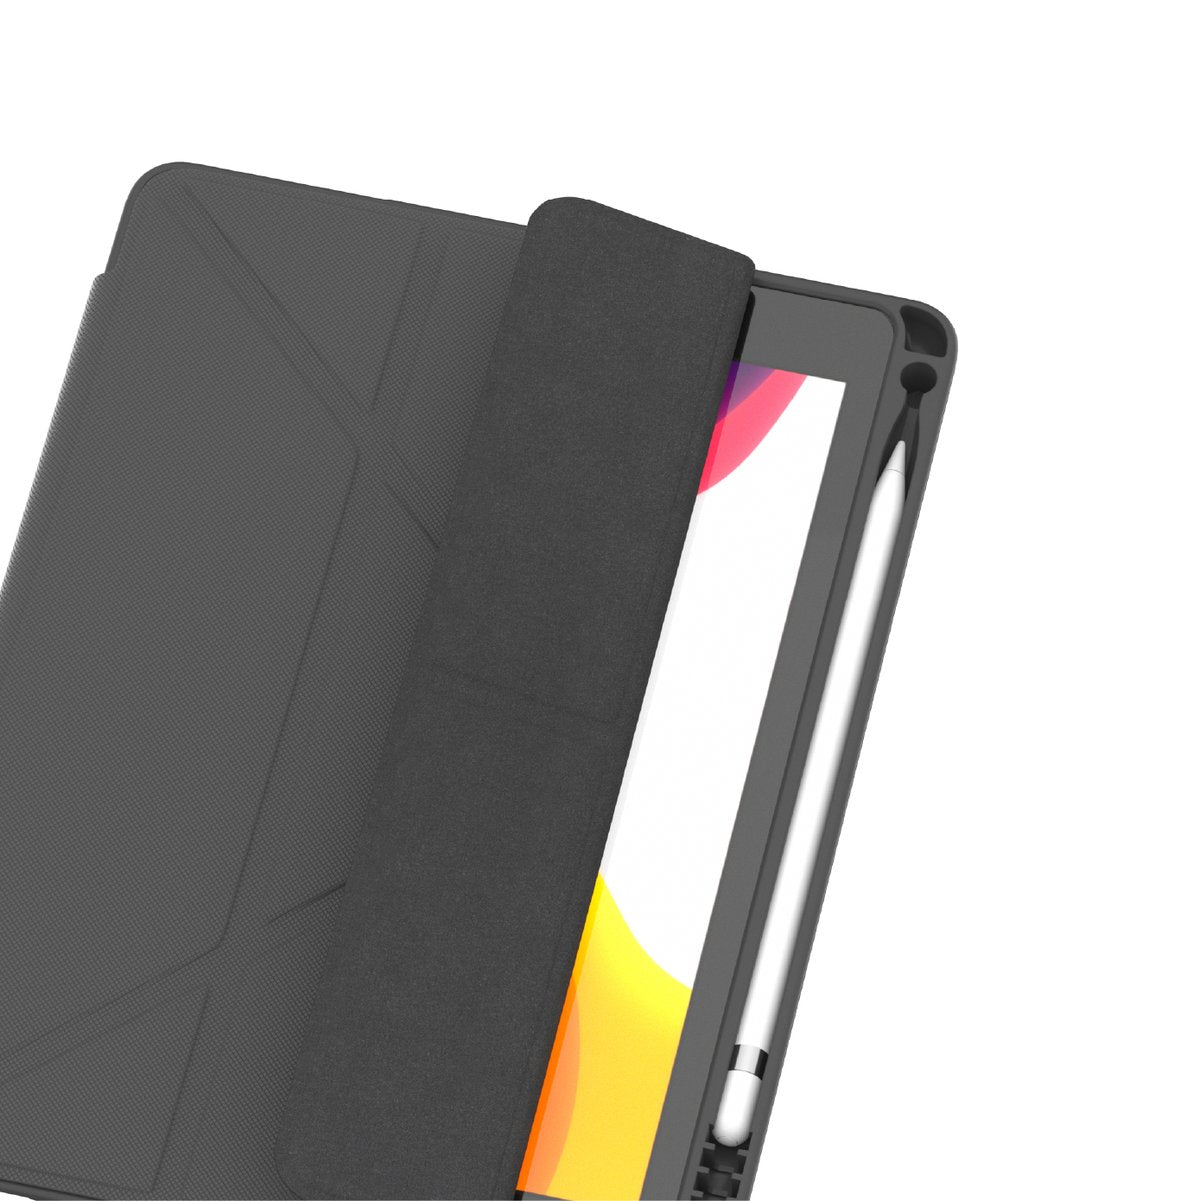 AmazingThing Evolution Folio Case for iPad - Black